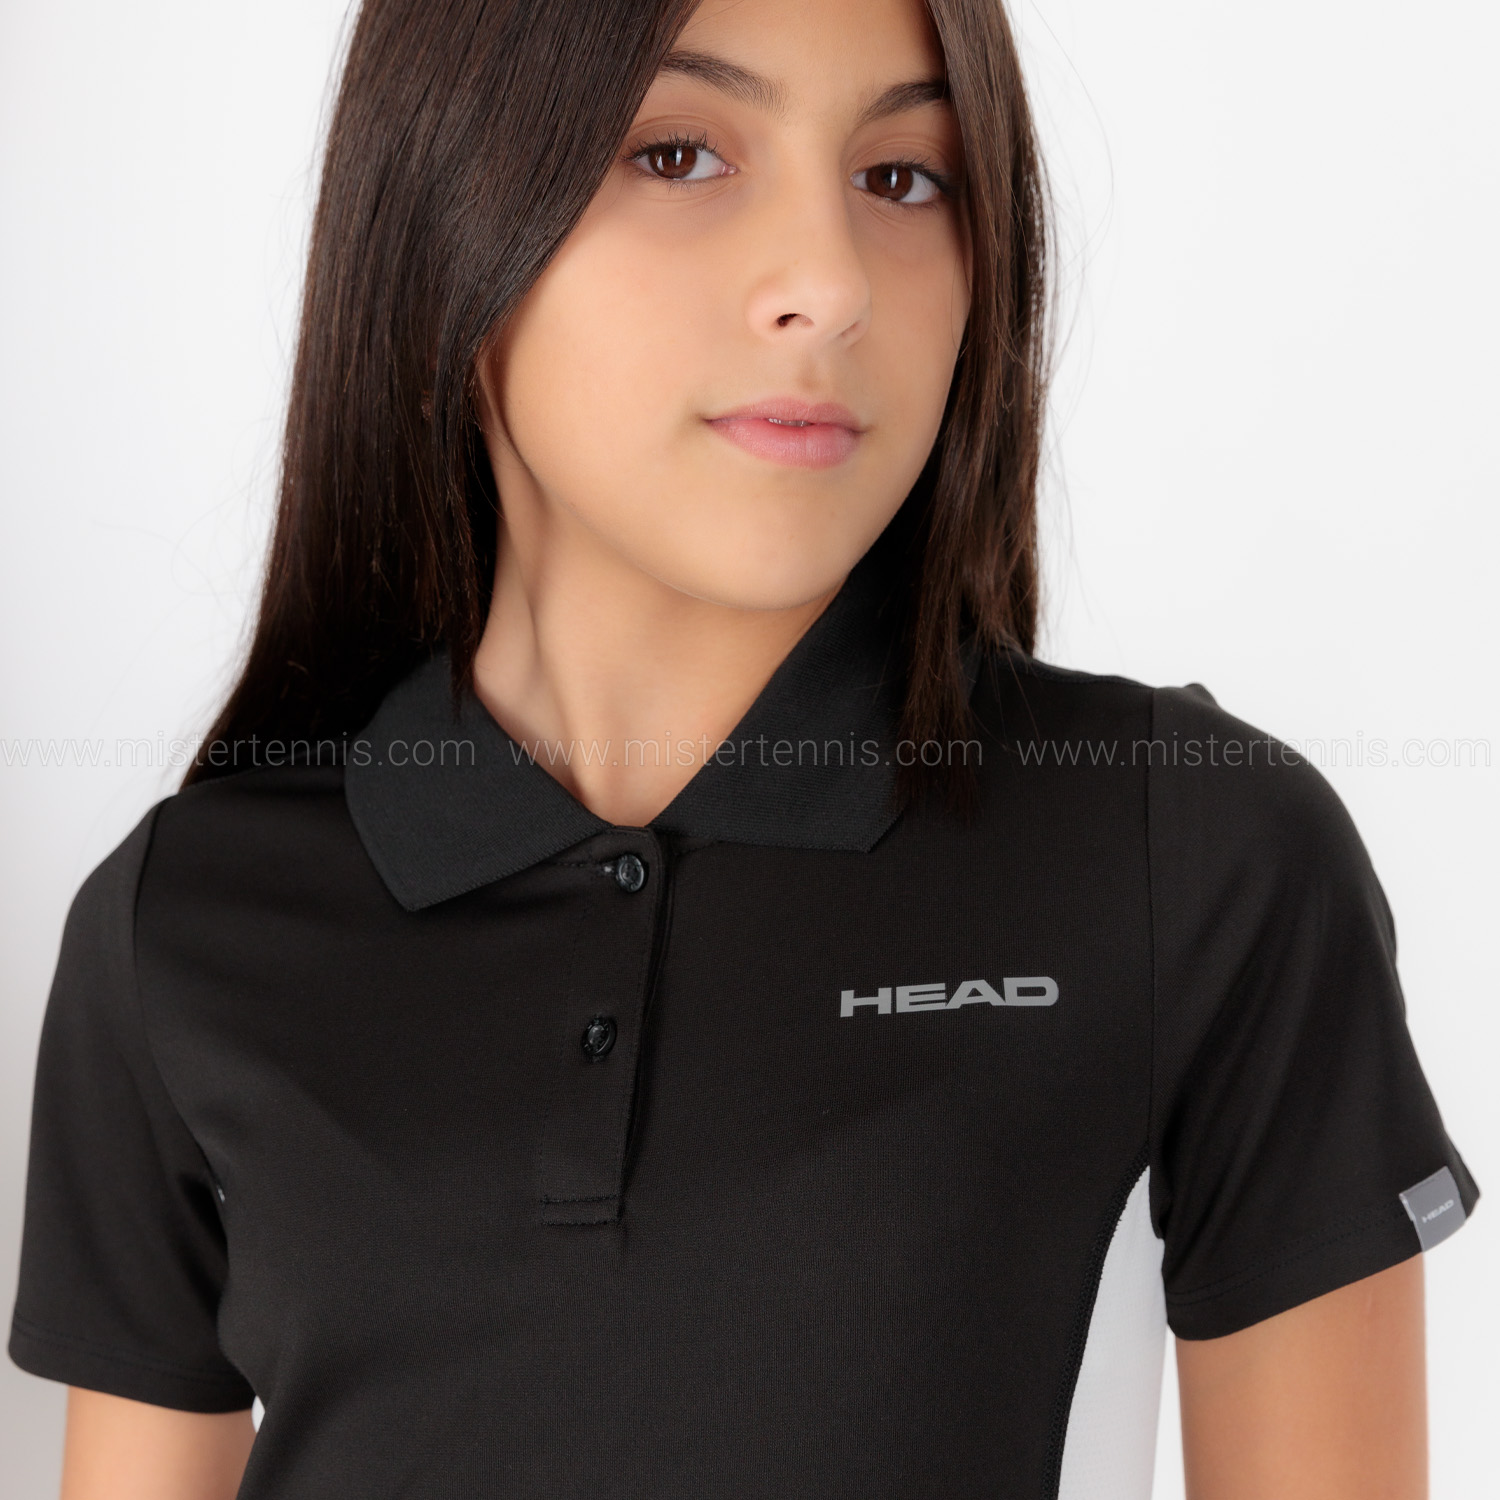 Head Club Tech Polo Girl - Black